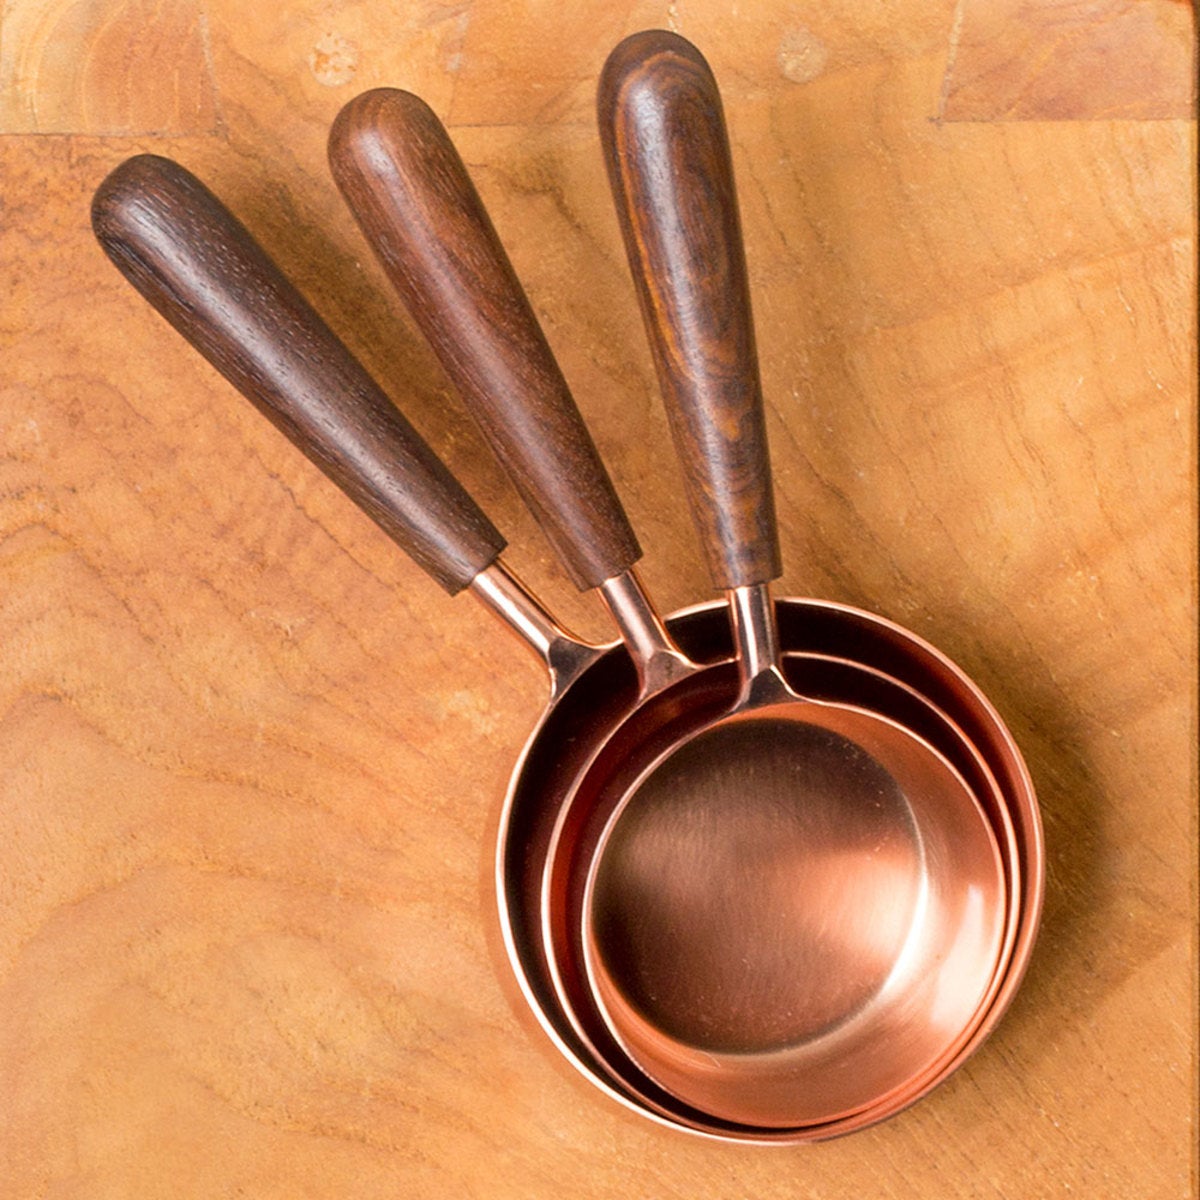 https://www.vivaterra.com/images/v2297-handcrafted-copper-measuring-cups.jpg_1200Wx1200H.jpg?format=1200Wx1200H